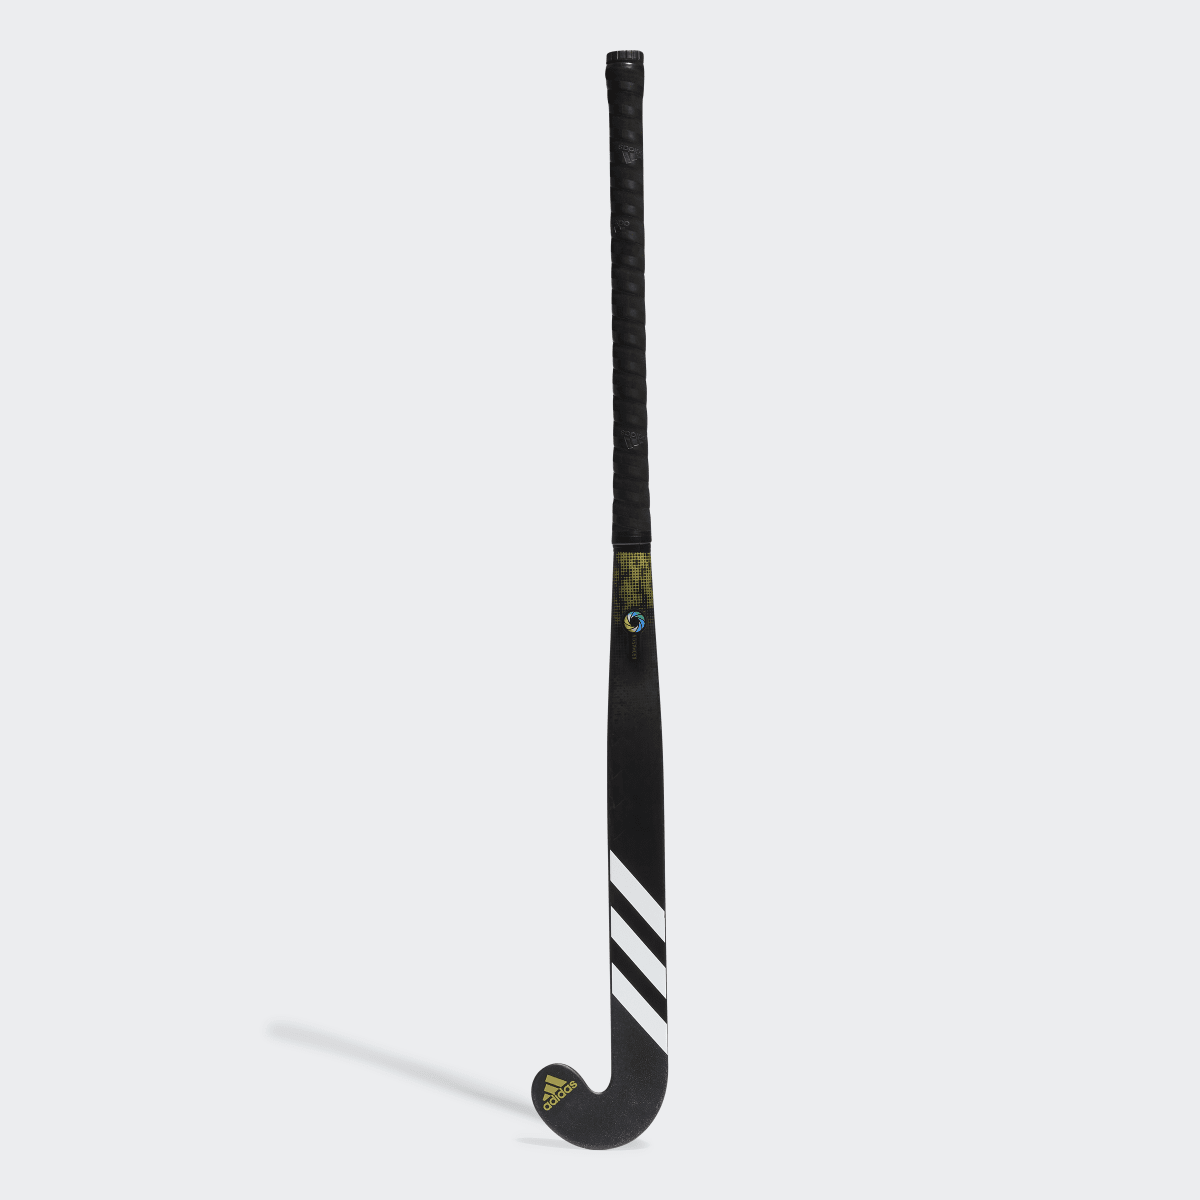 Adidas Estro Kromaskin.1 Black/Gold Hockey Stick 95 cm. 3